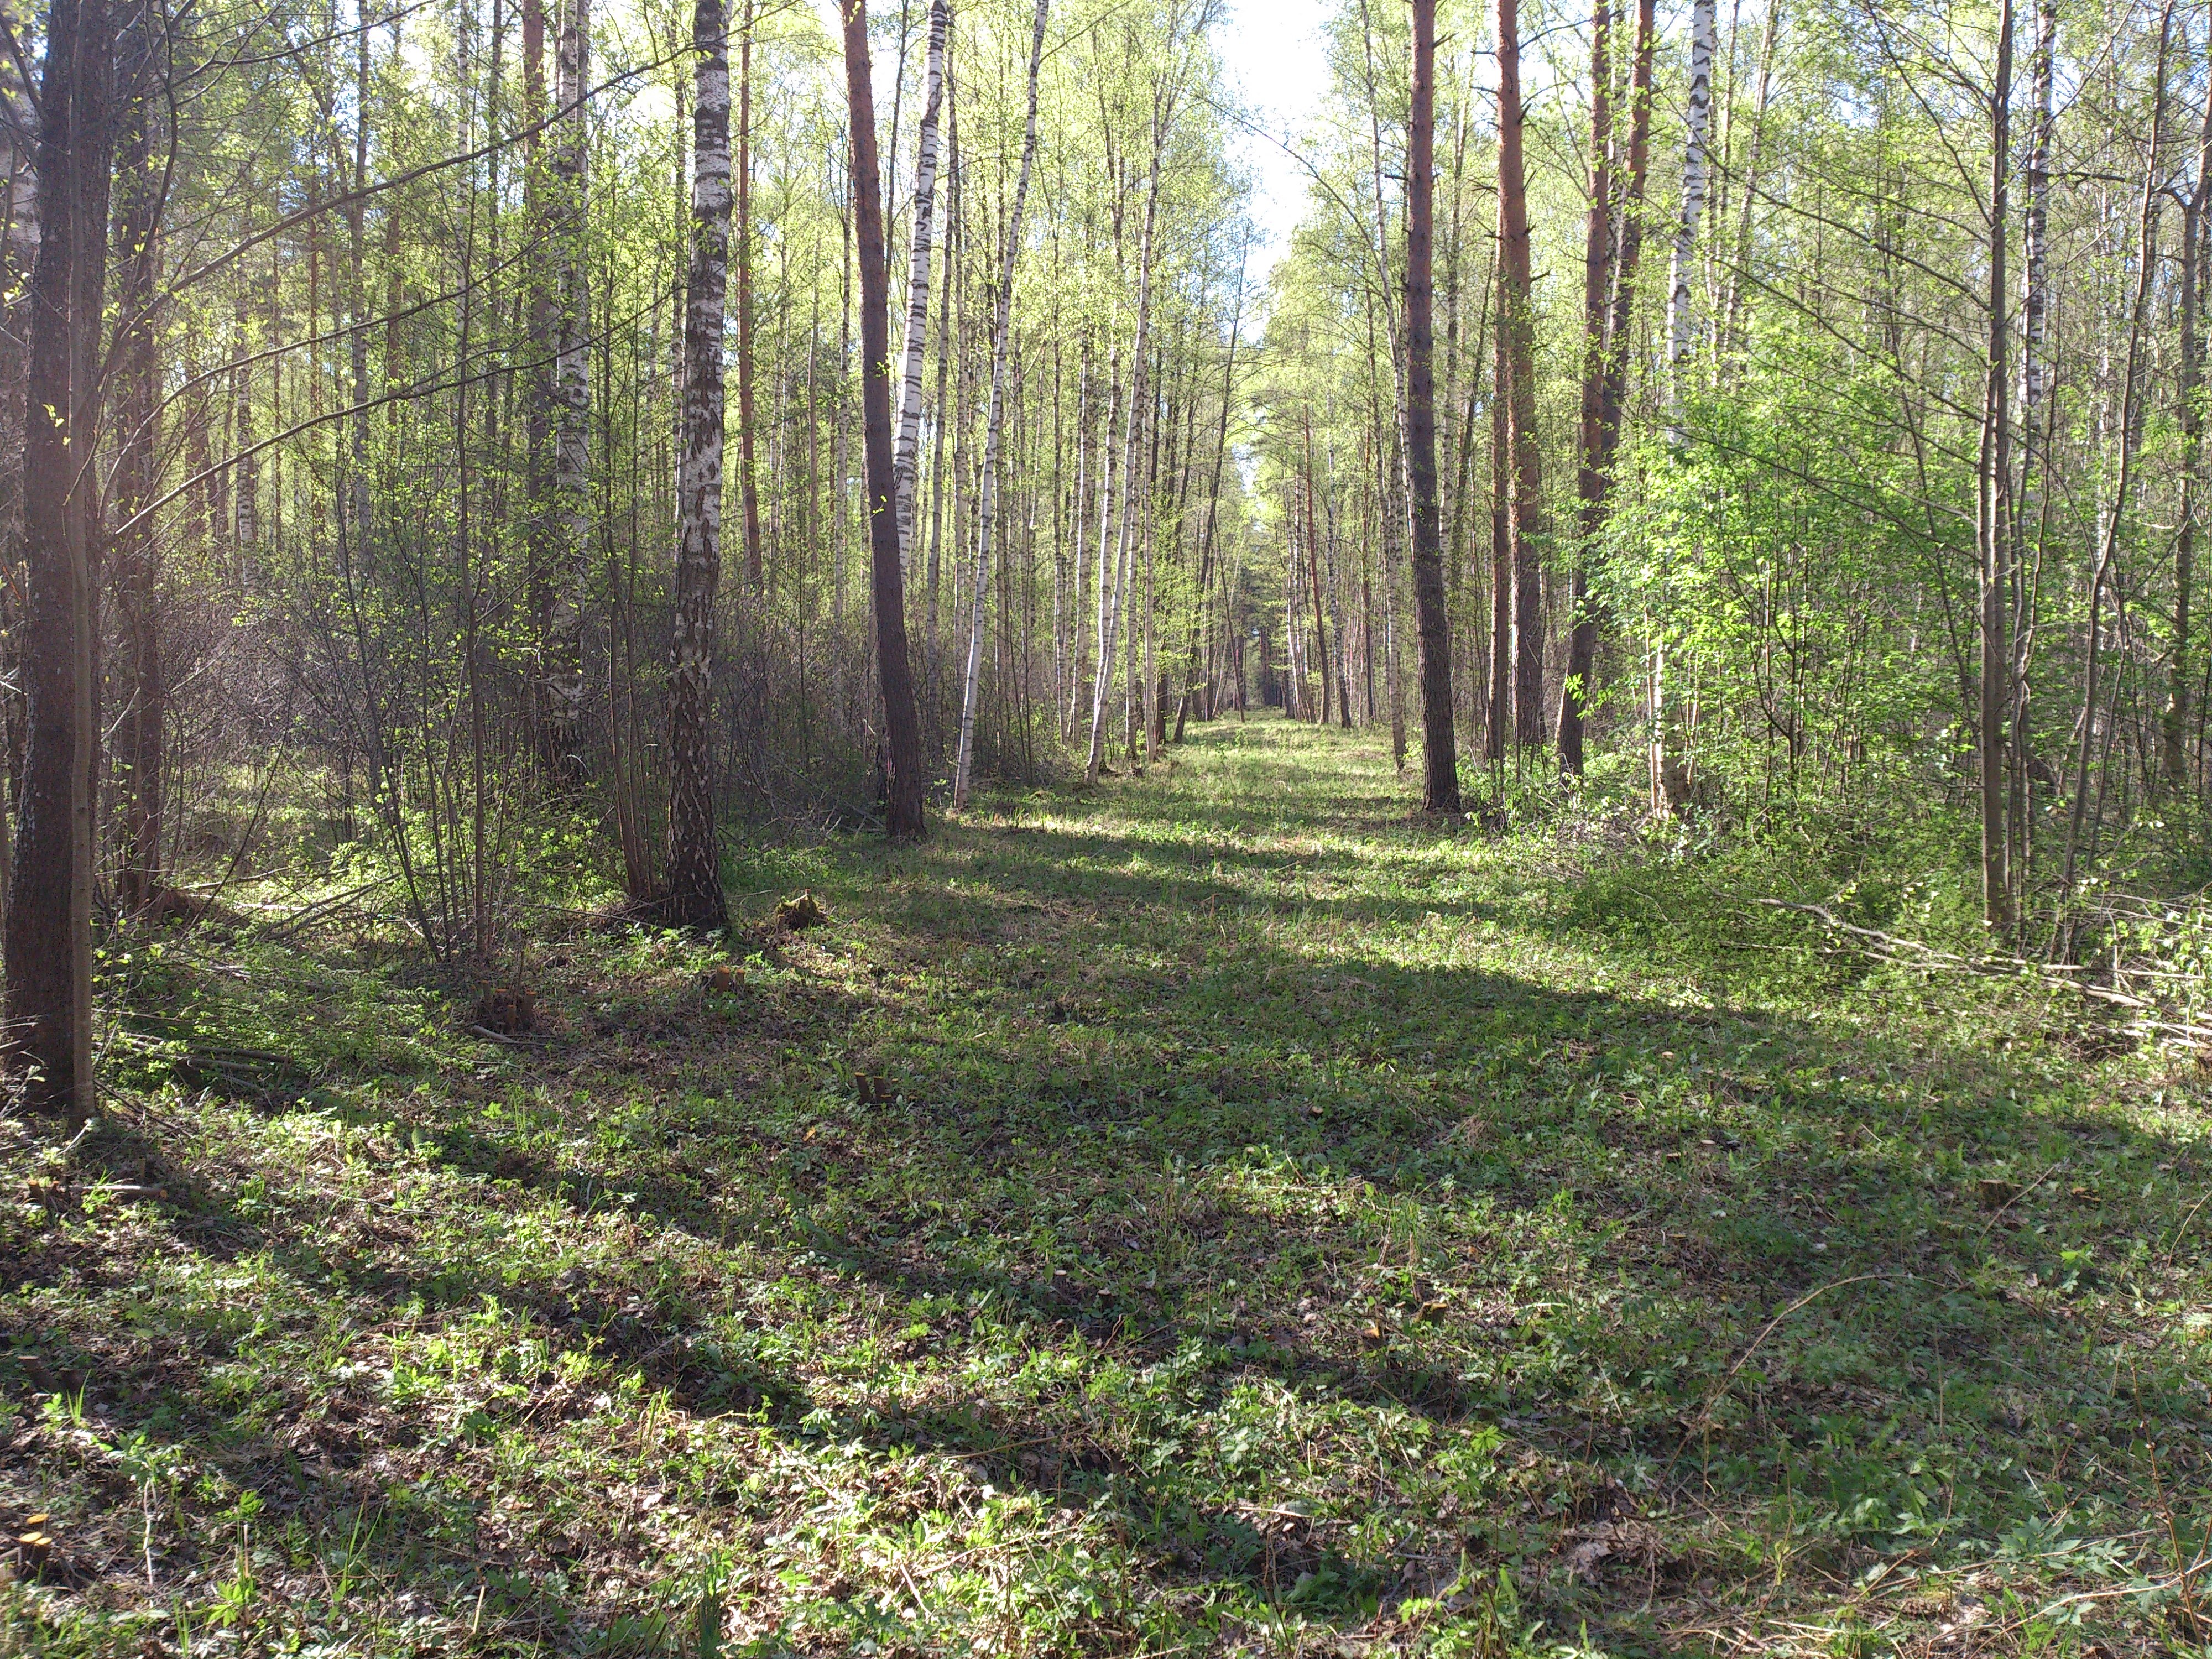 Jelgavas pilsētas meži